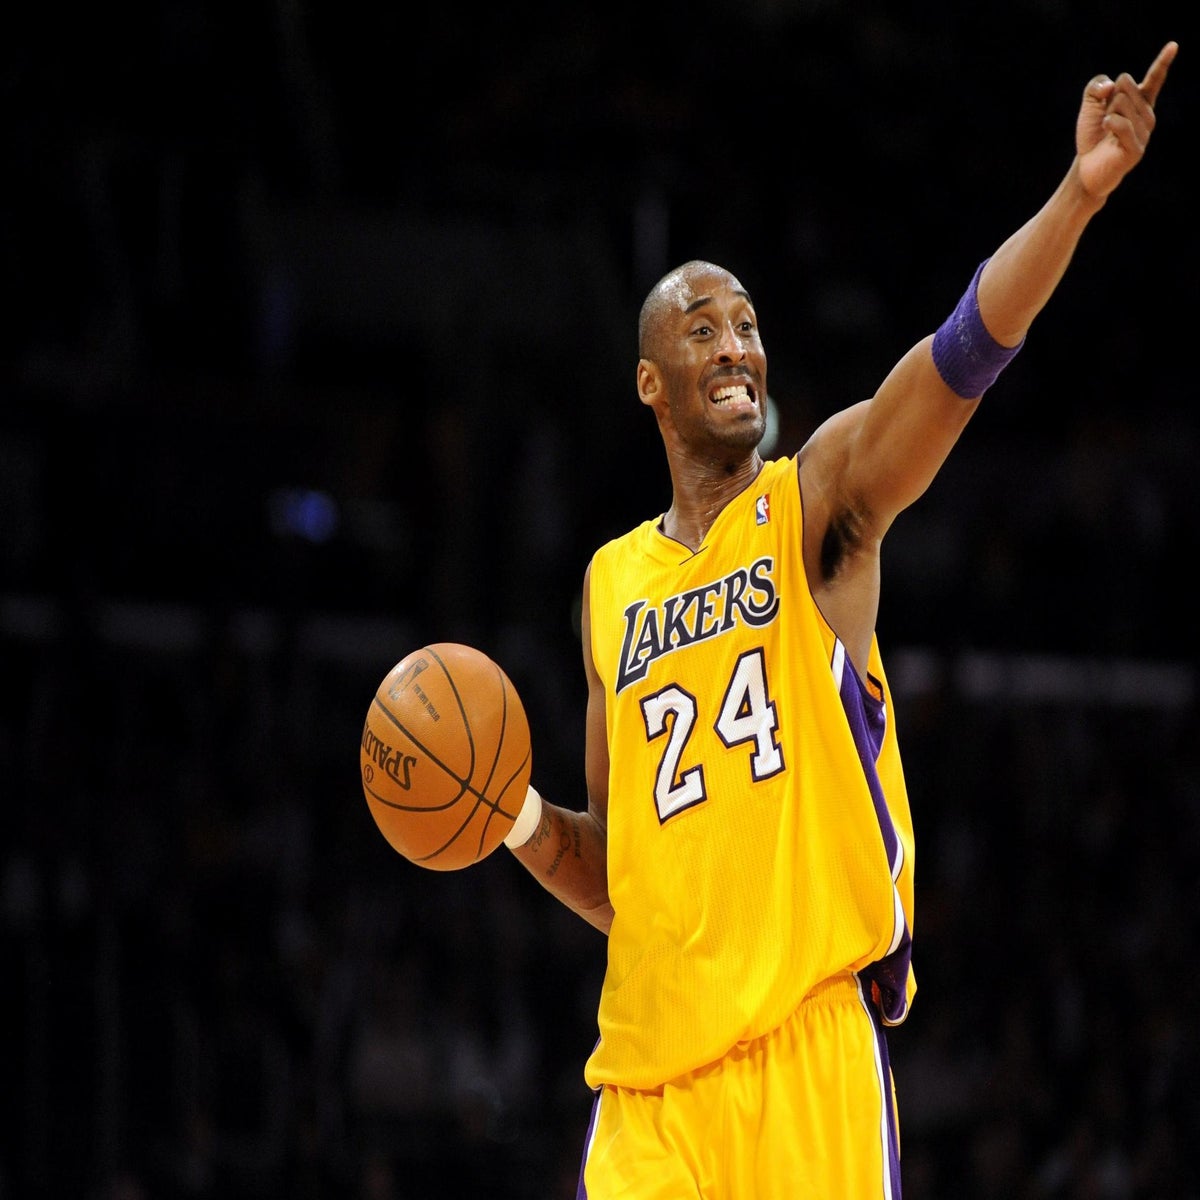 Commemorating a True Legend: On 8/24, we celebrate Kobe Bryant's